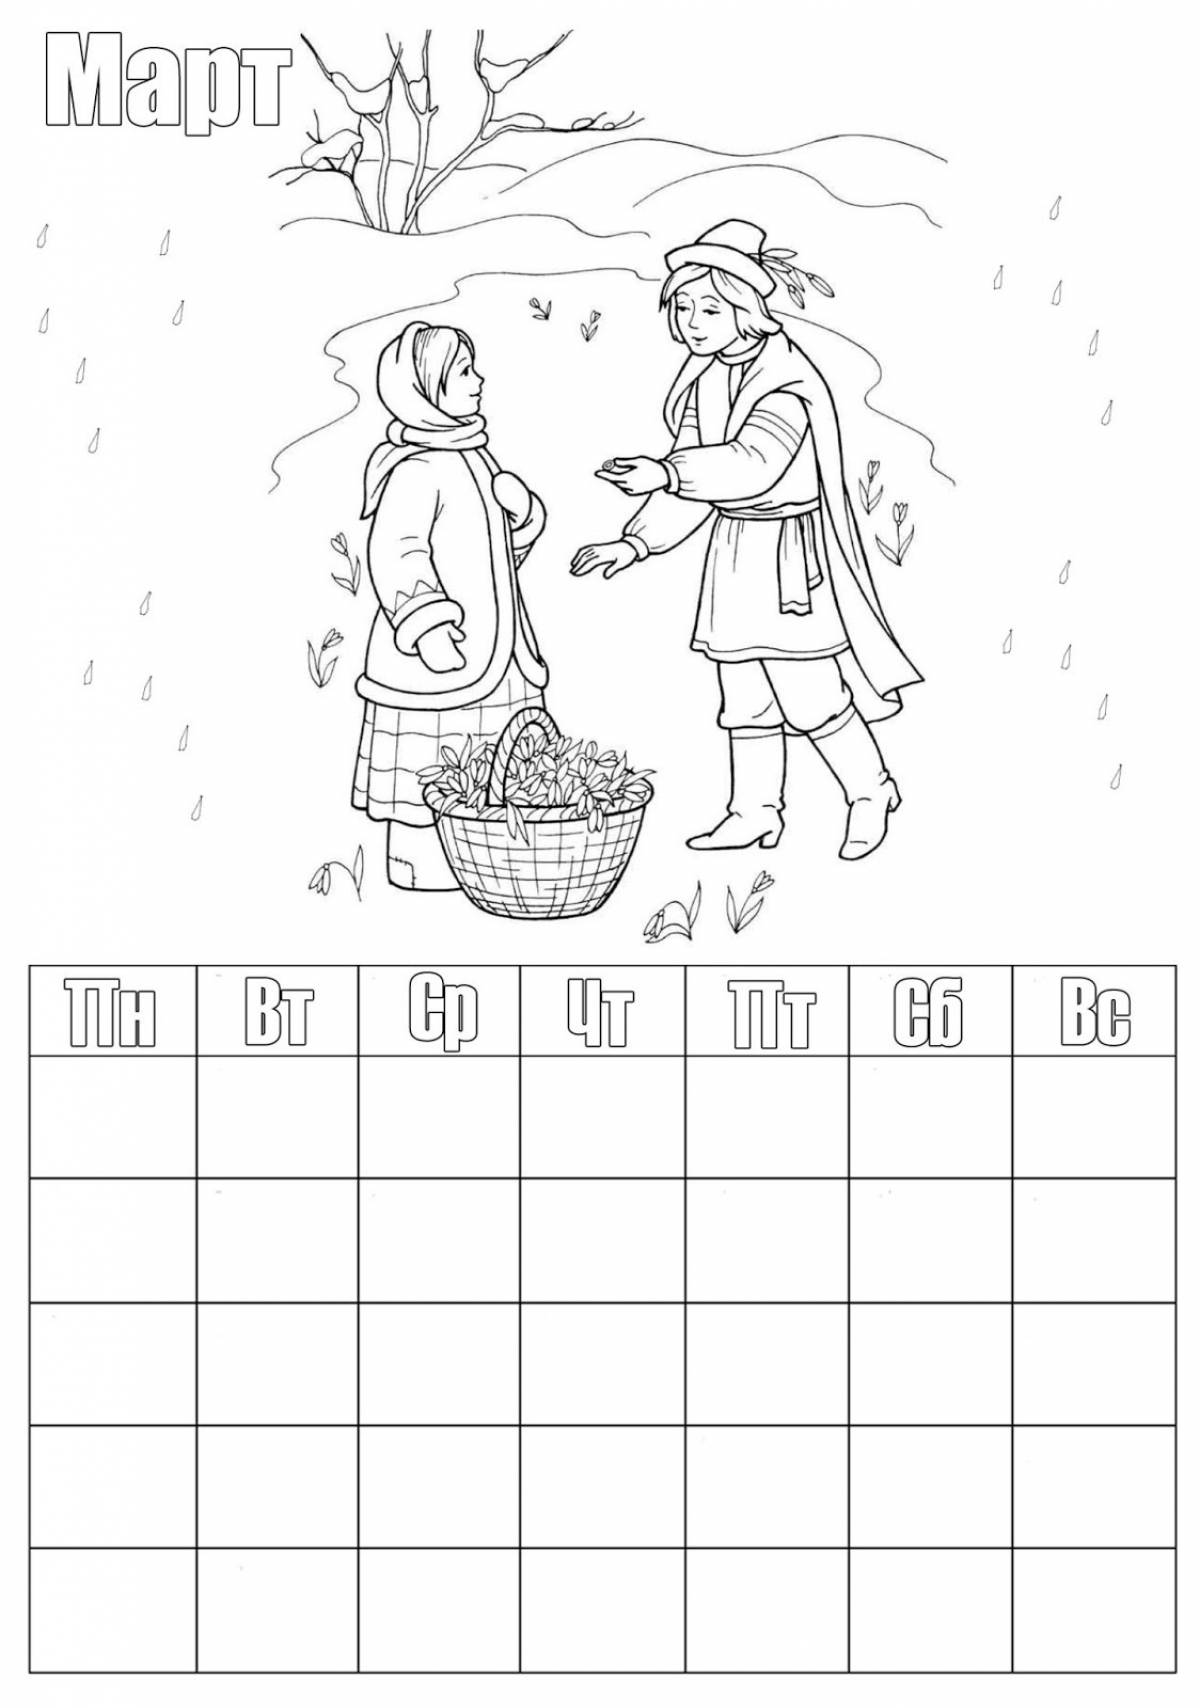 Календарь с датами